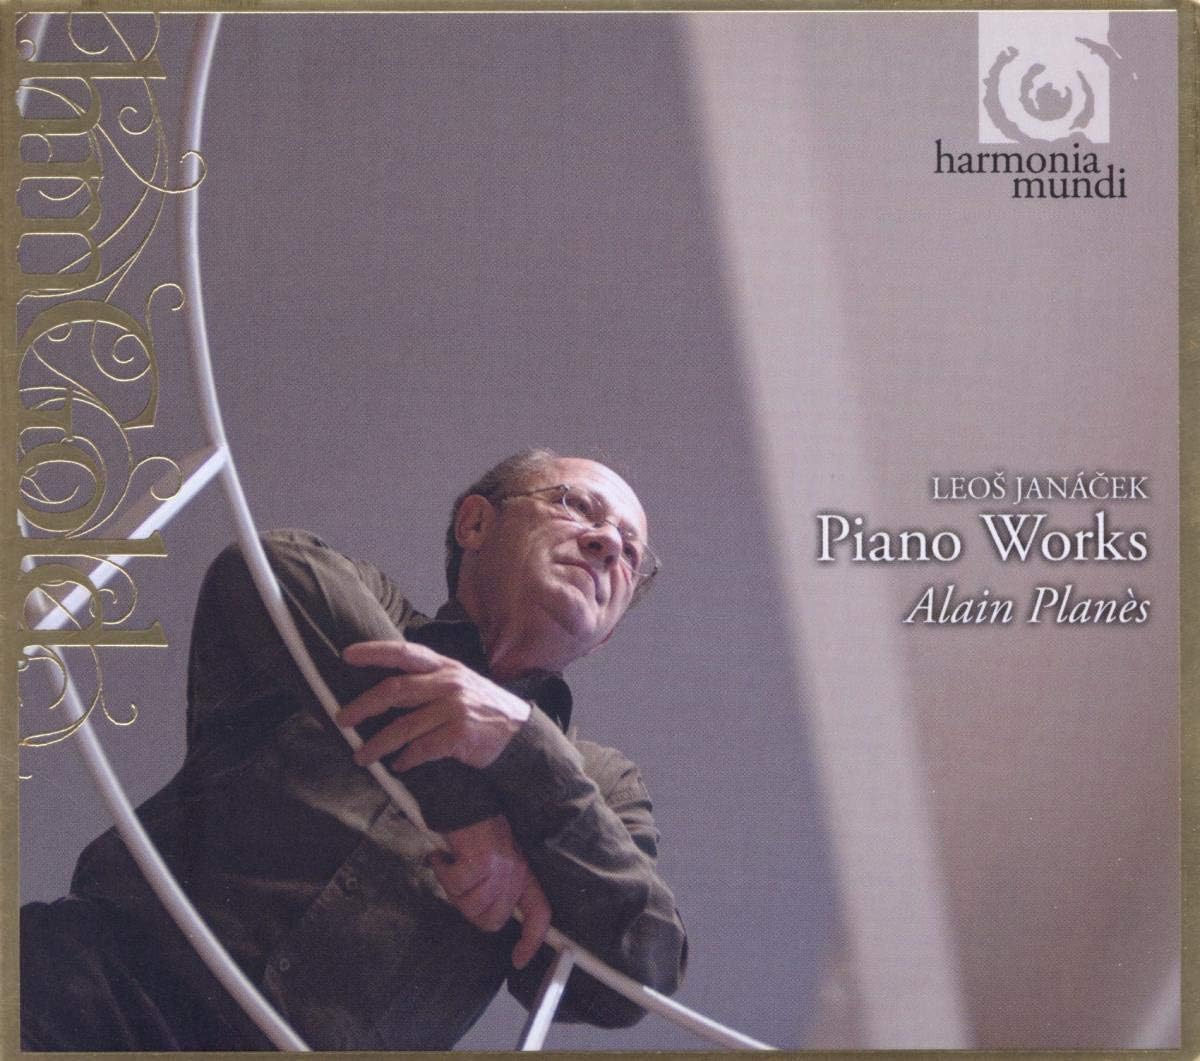 Leos Janacek: Piano Works | Alain Planes